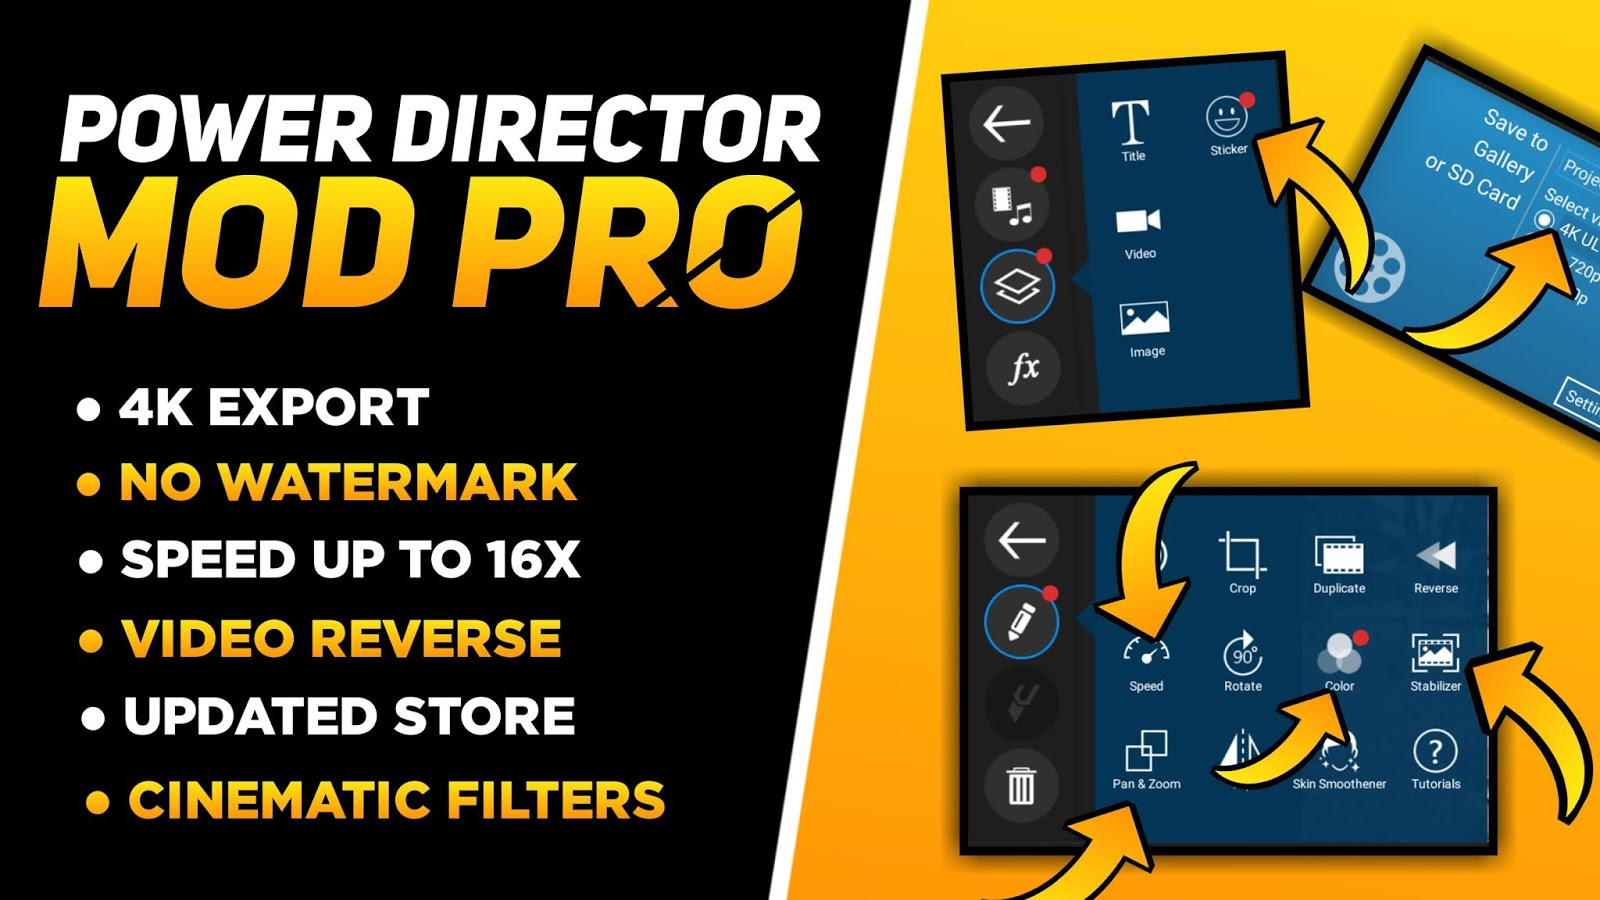 Power Director Pro Mod Apk 2019 - Download